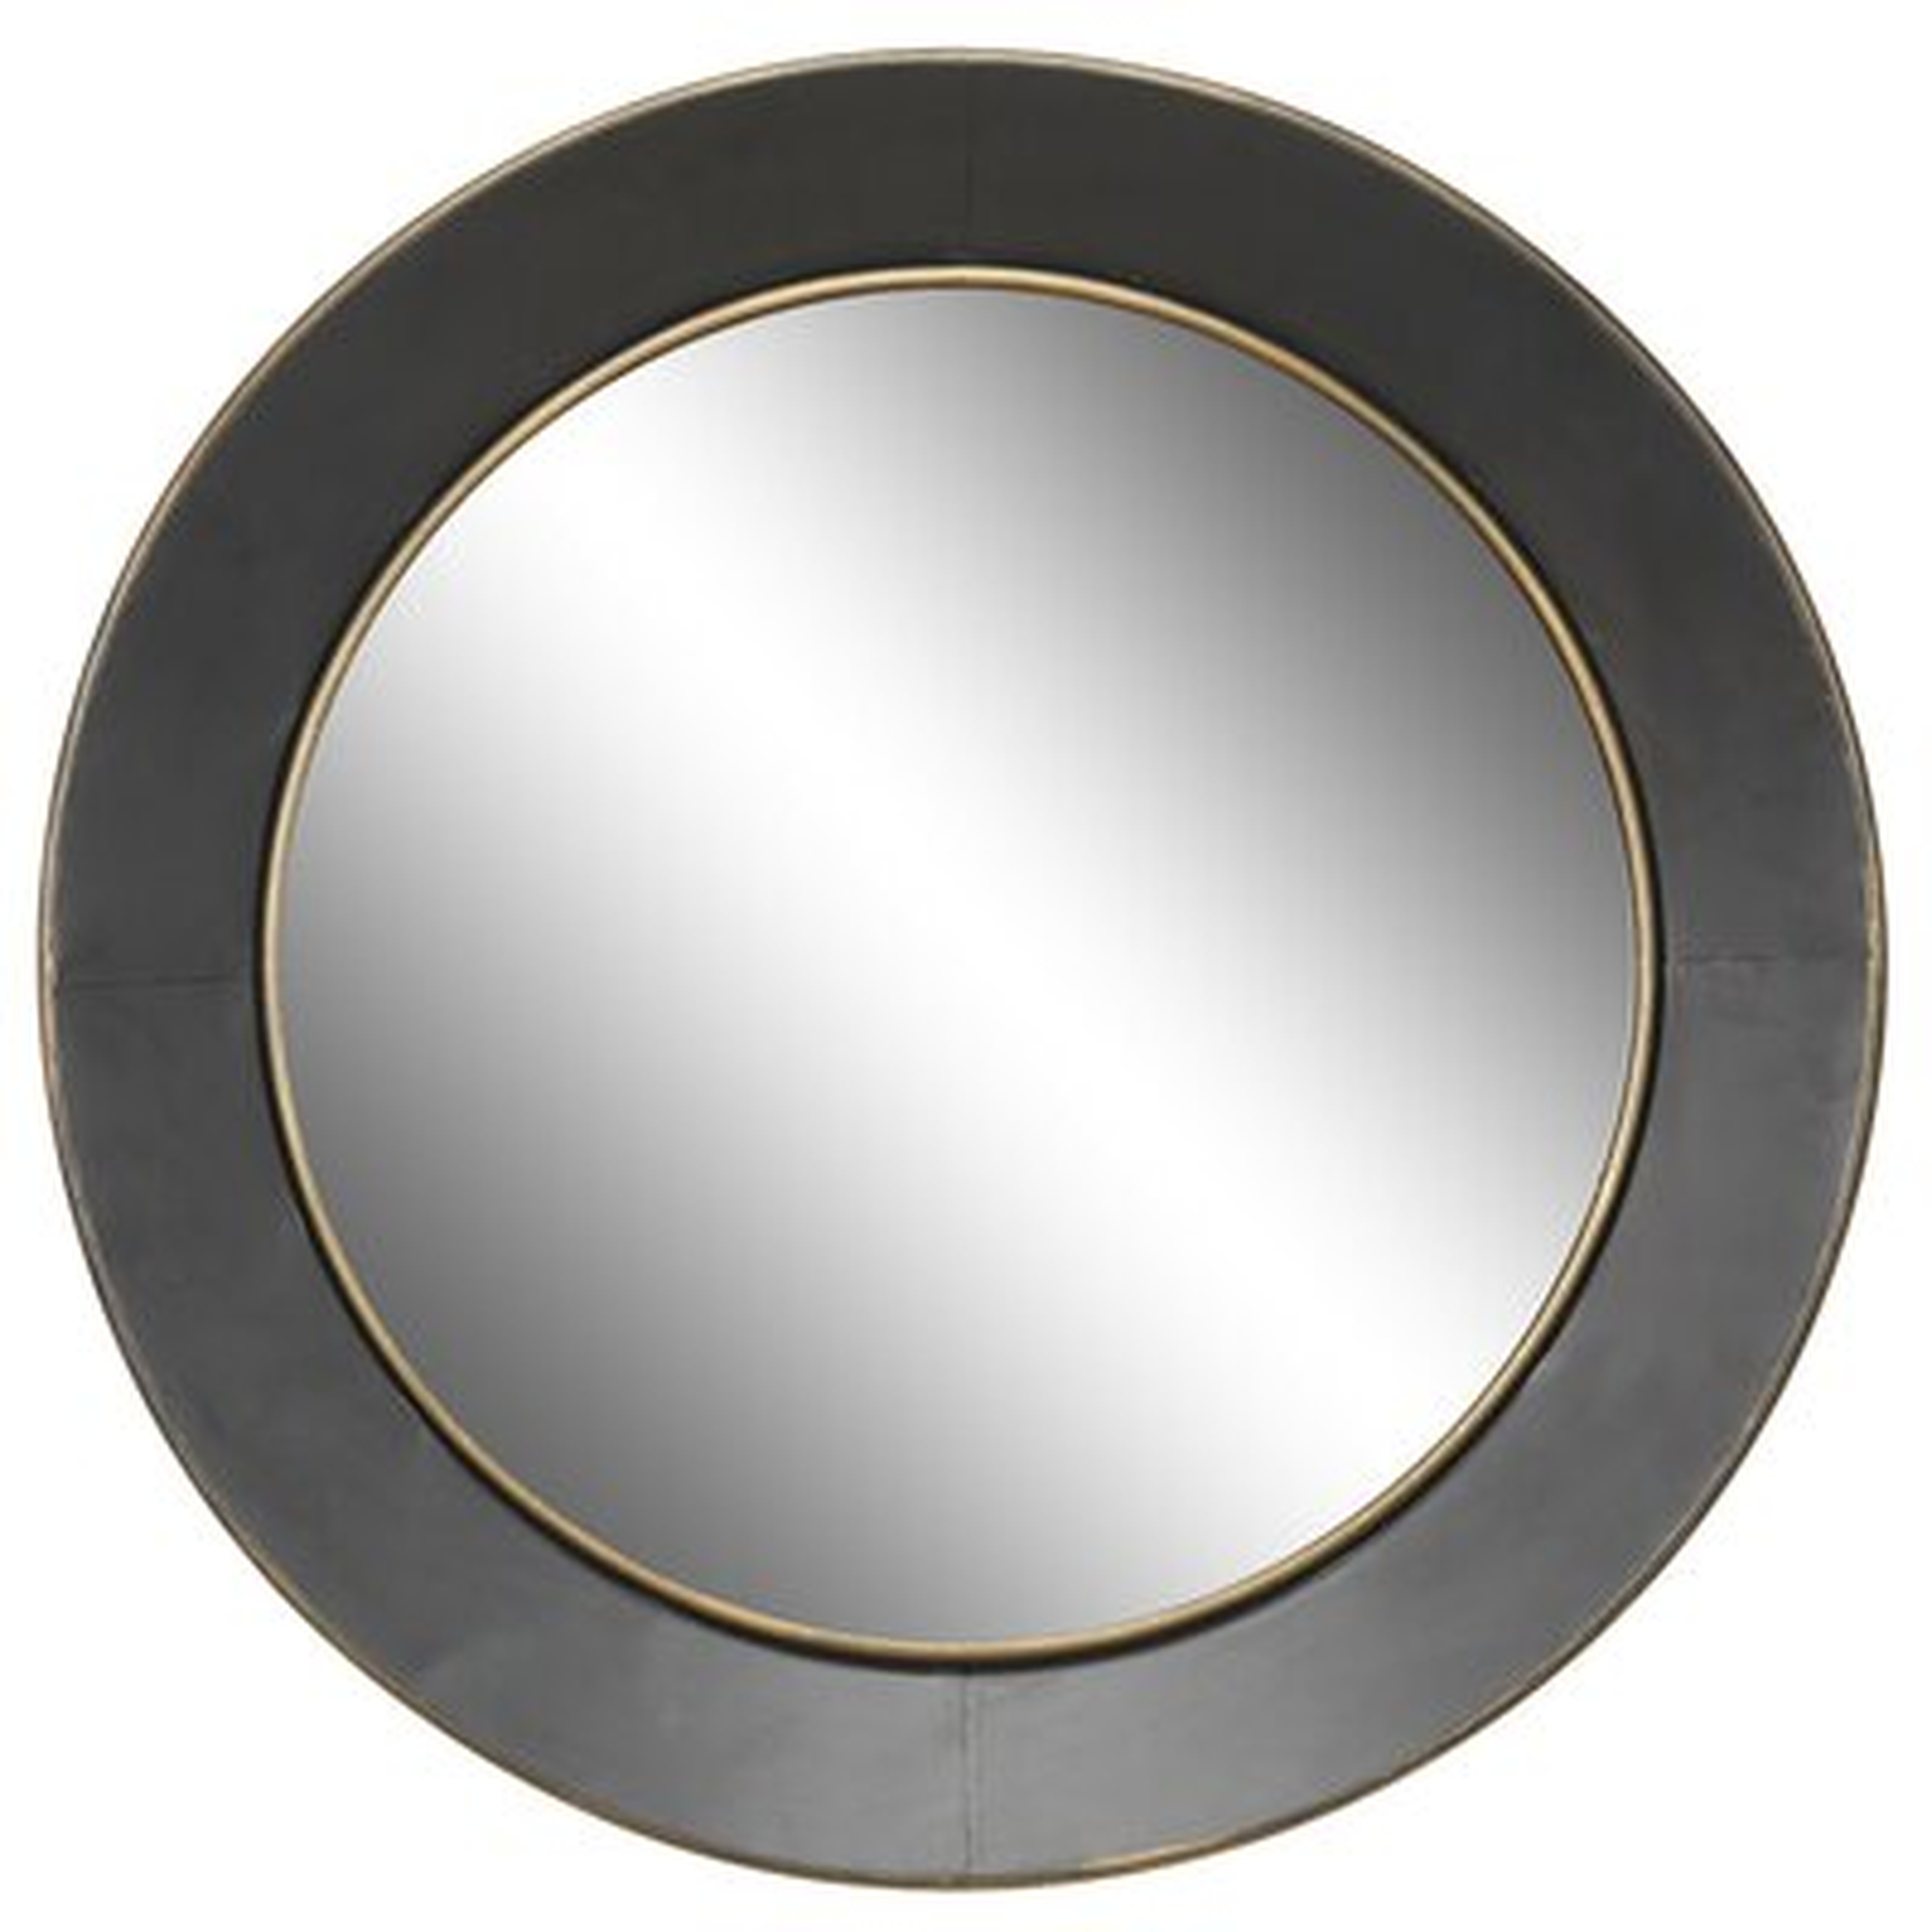 Large, Round Industrial Metal Wall Mirror W/ Metallic Gold Trim, 30” X 30” - Wayfair